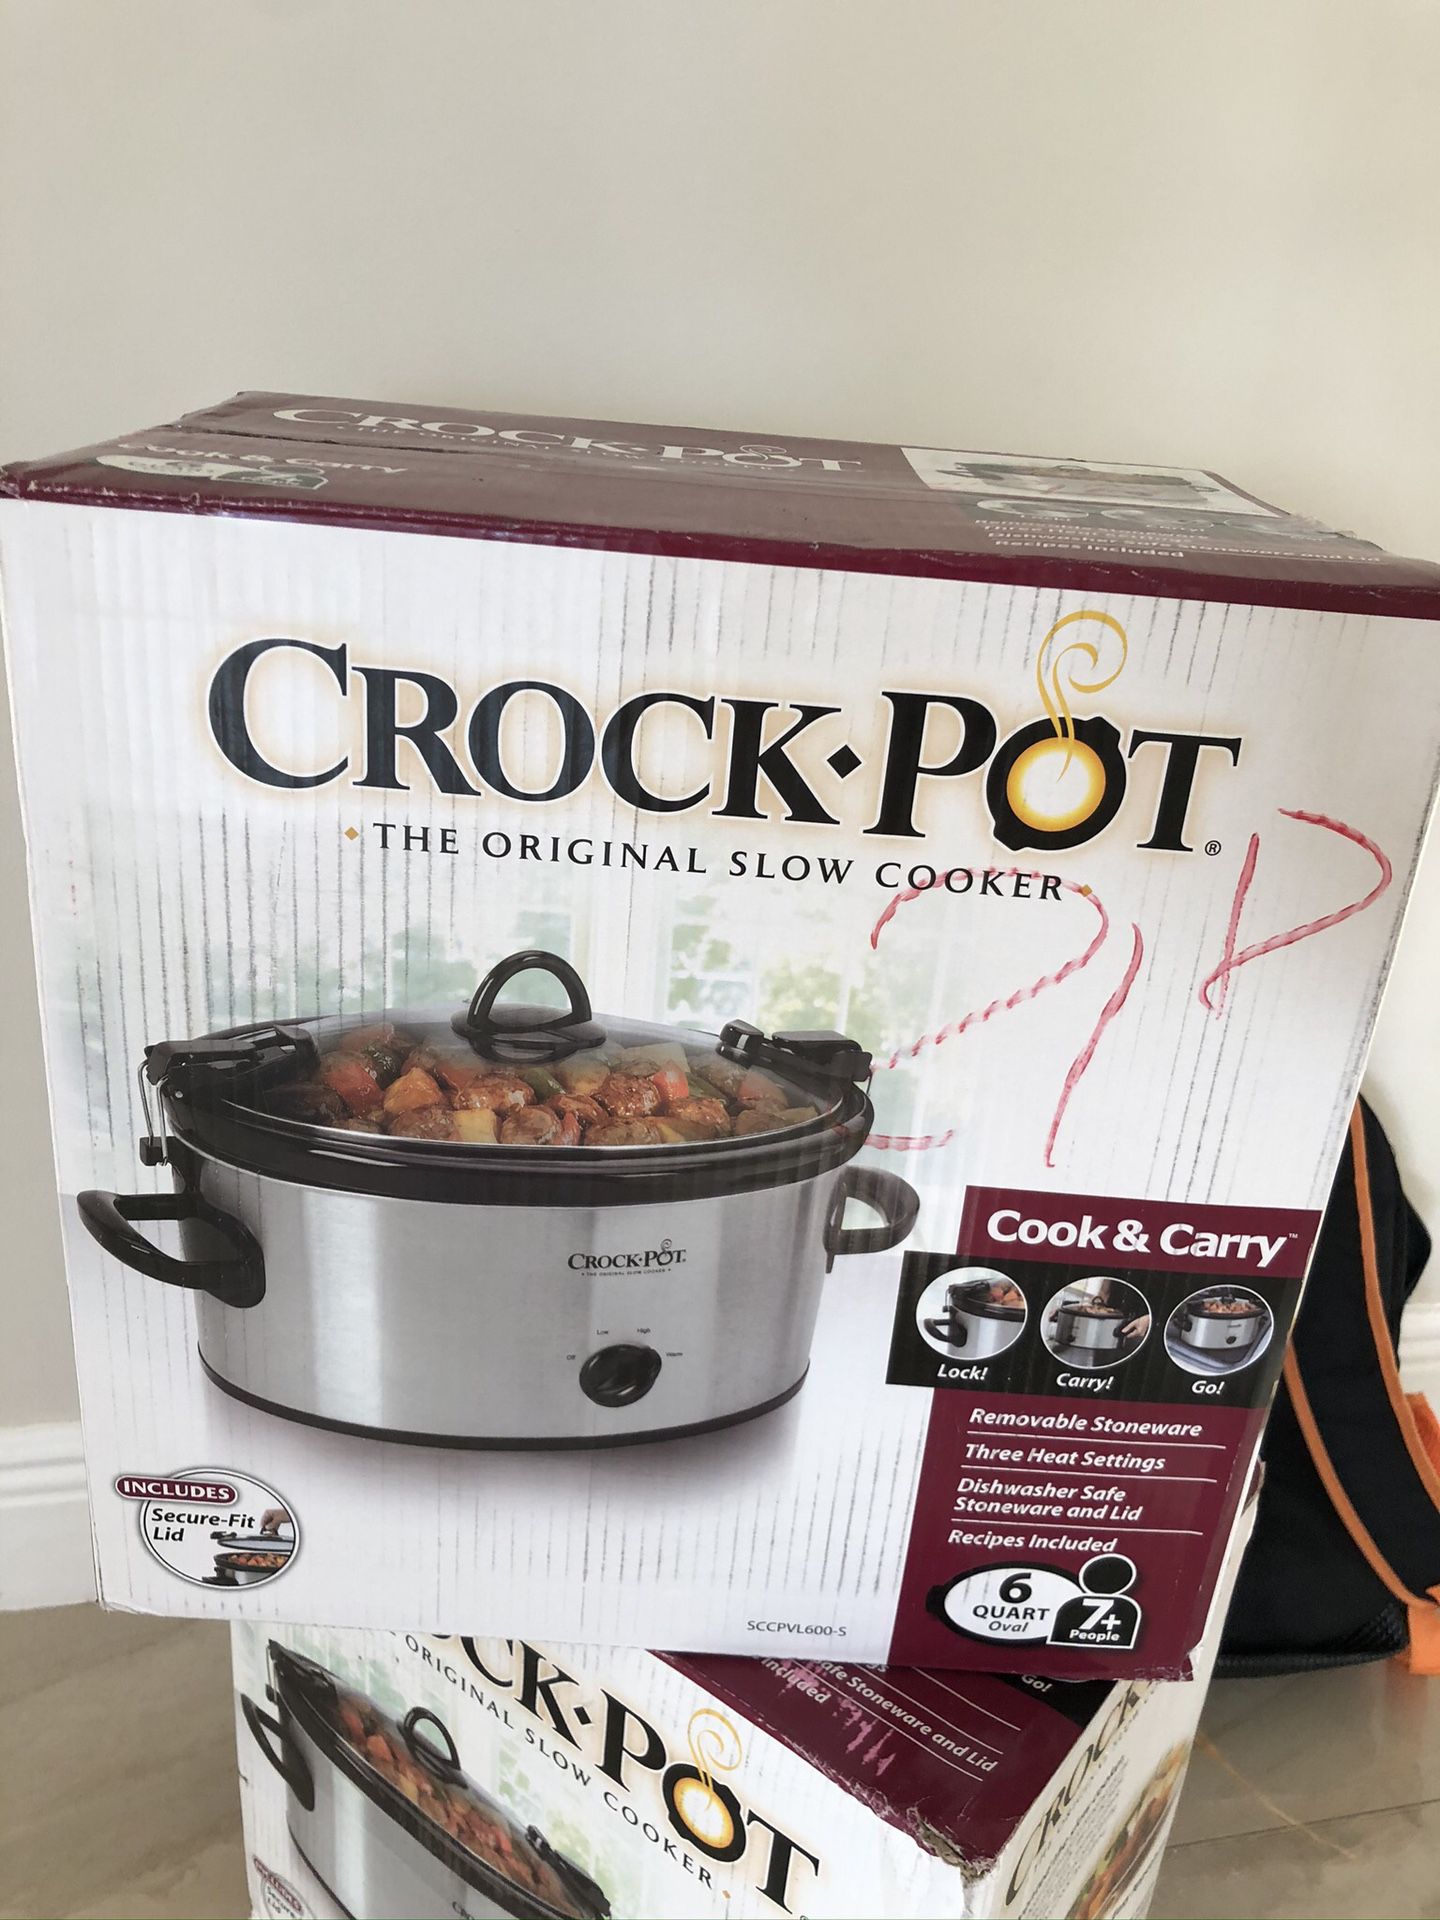 Large 6 quart crock pot